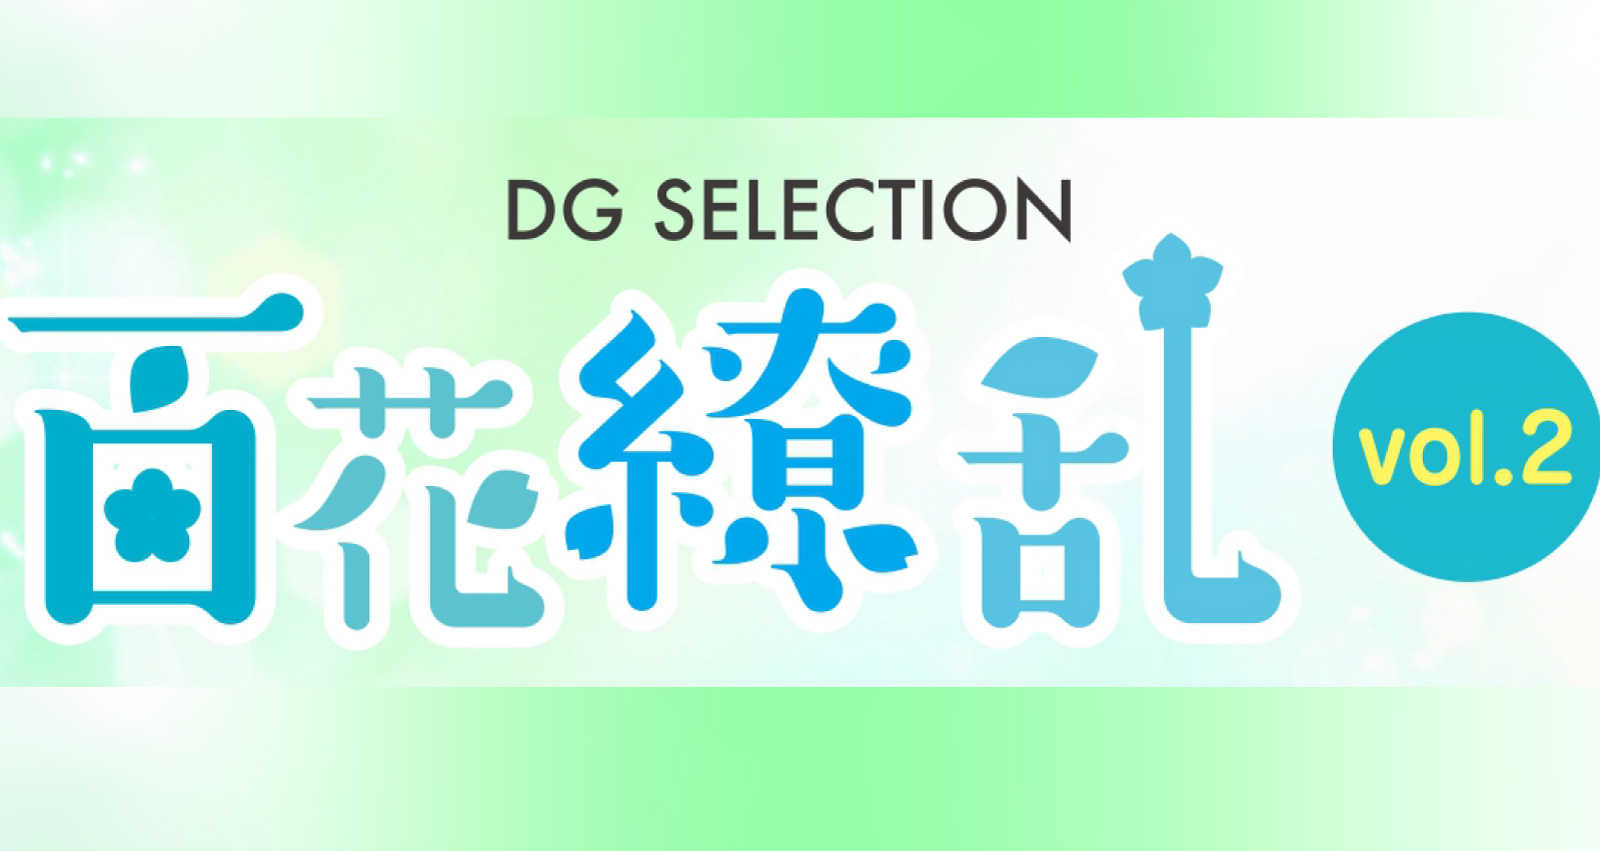 DG SELECTION 「百花繚乱」vol.2